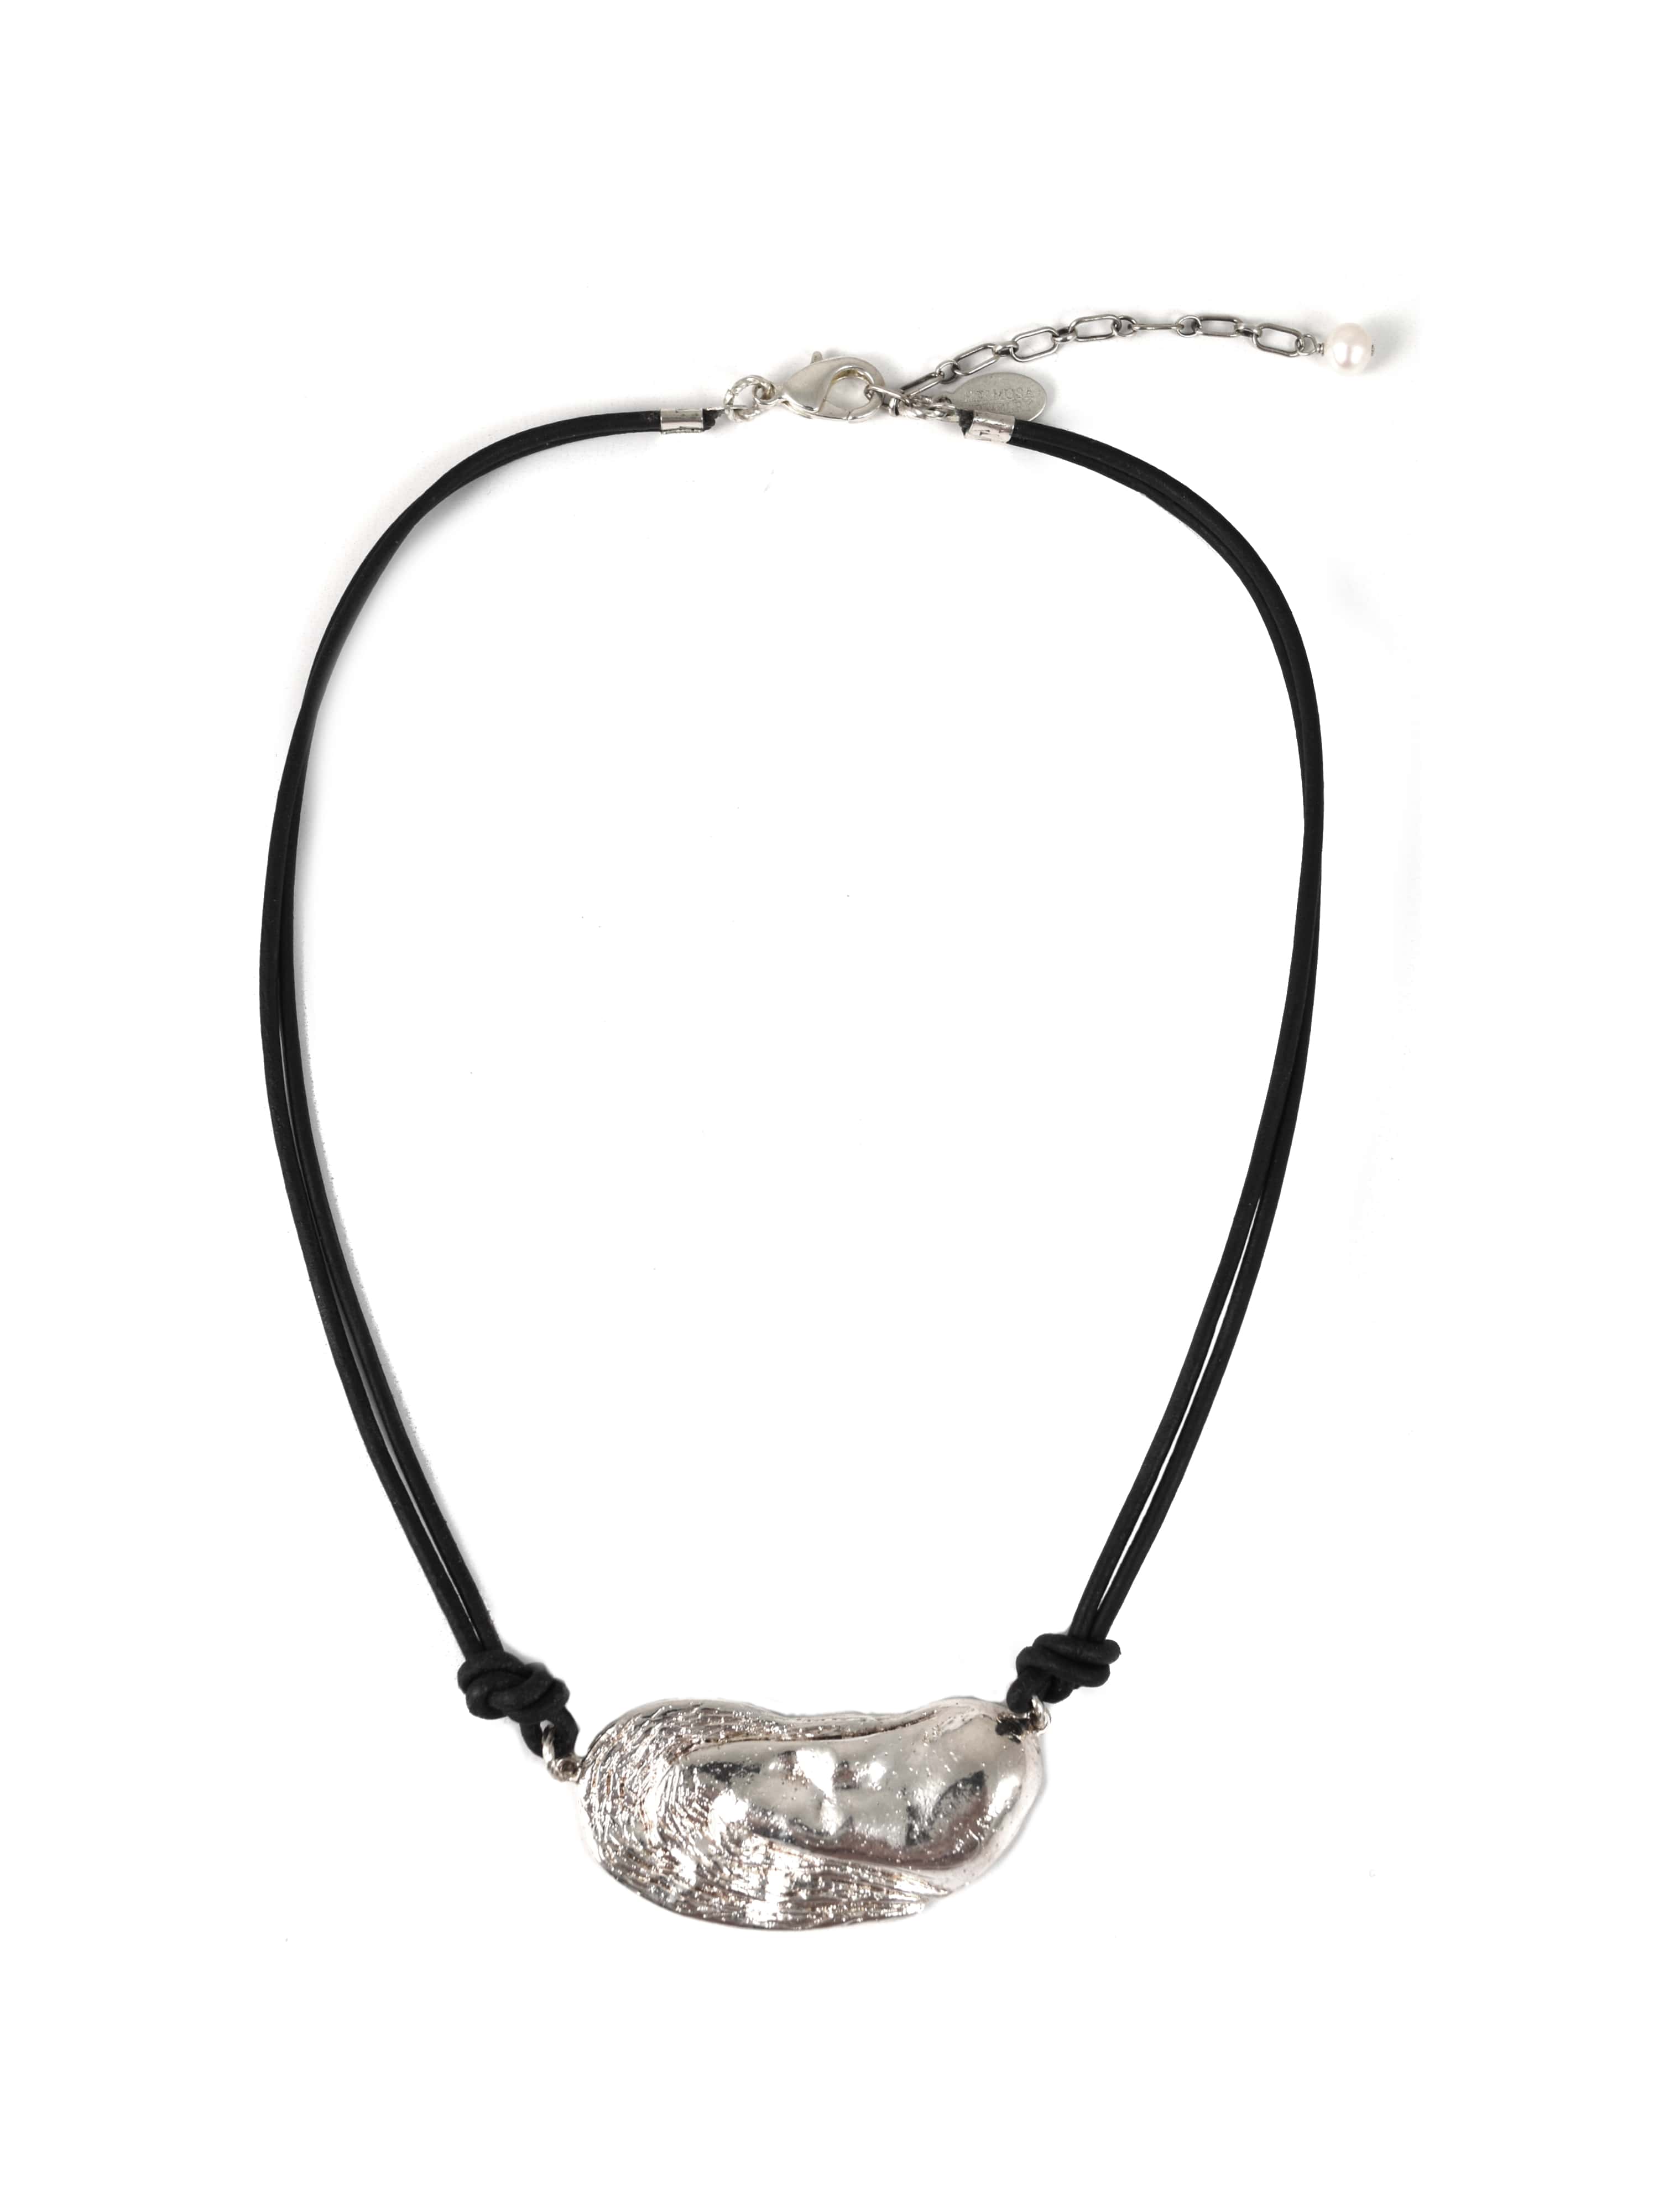 Castaway Oyster Necklace in Black